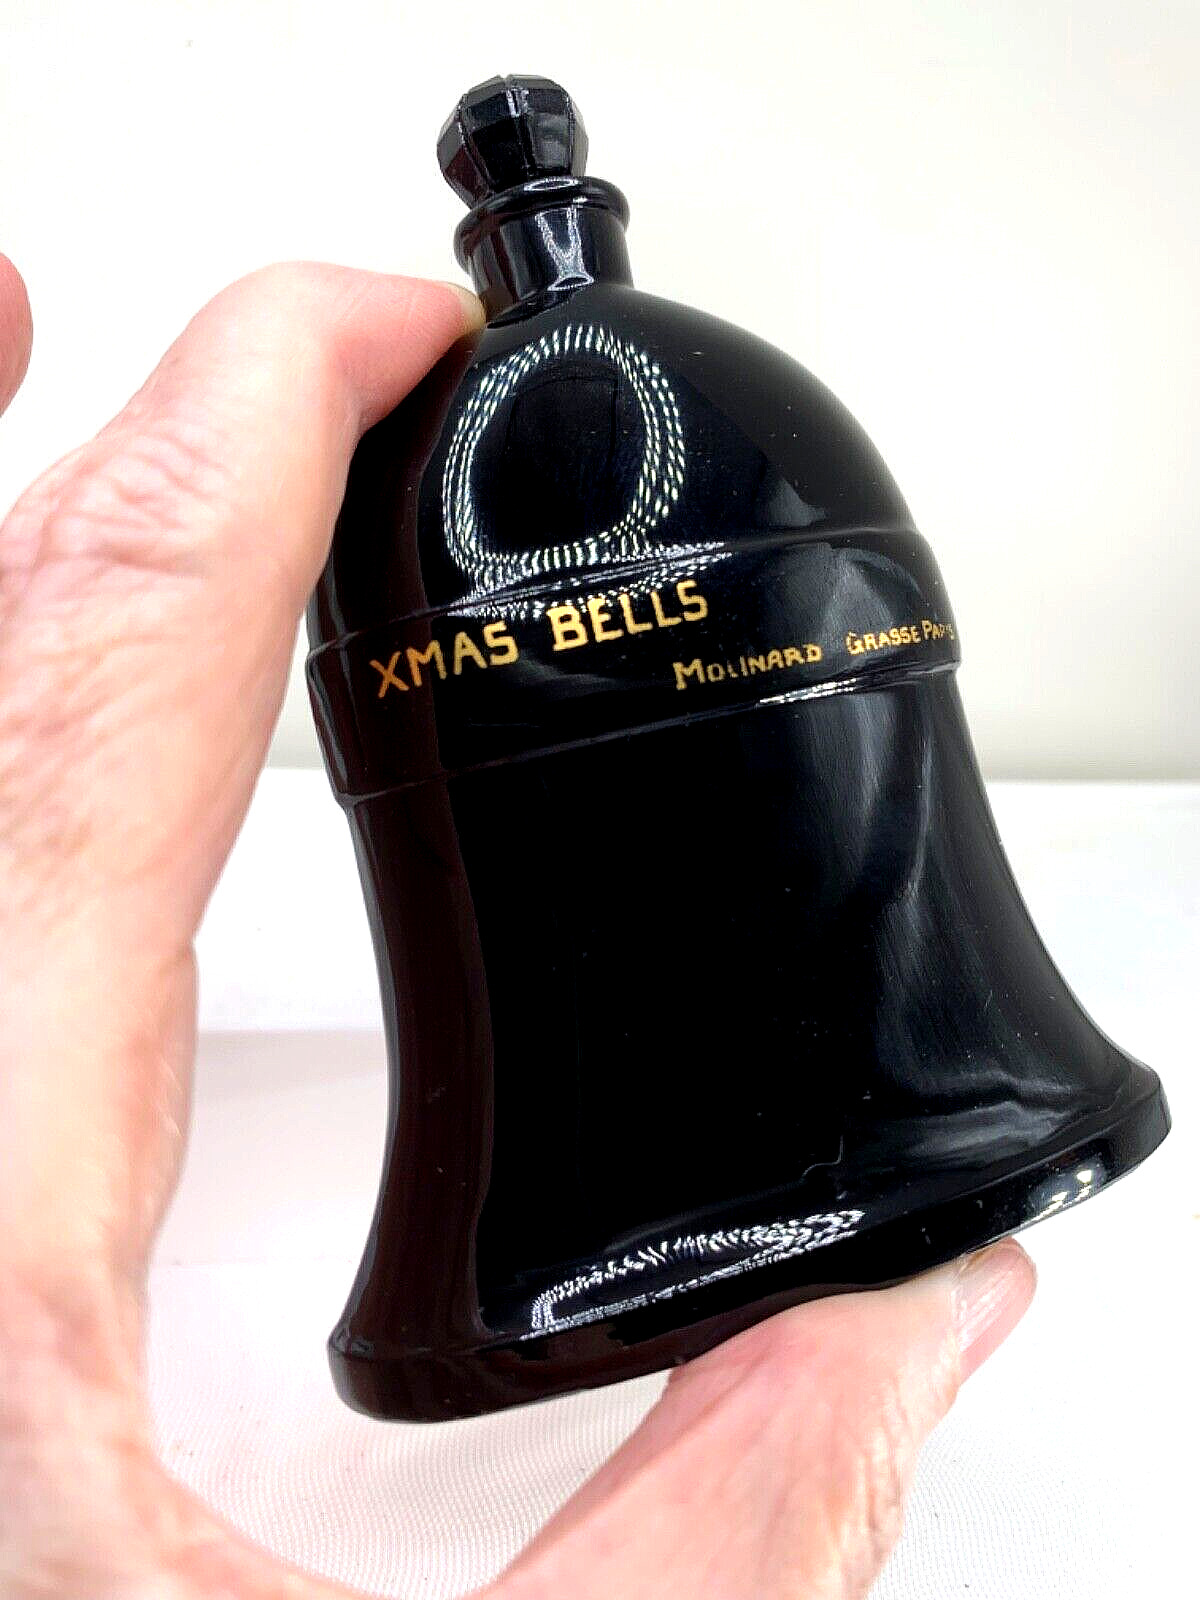 Magic Black A-etched VTG perfume bottle.  X-Mas Bells, Molinard. SEE TOP.  1926